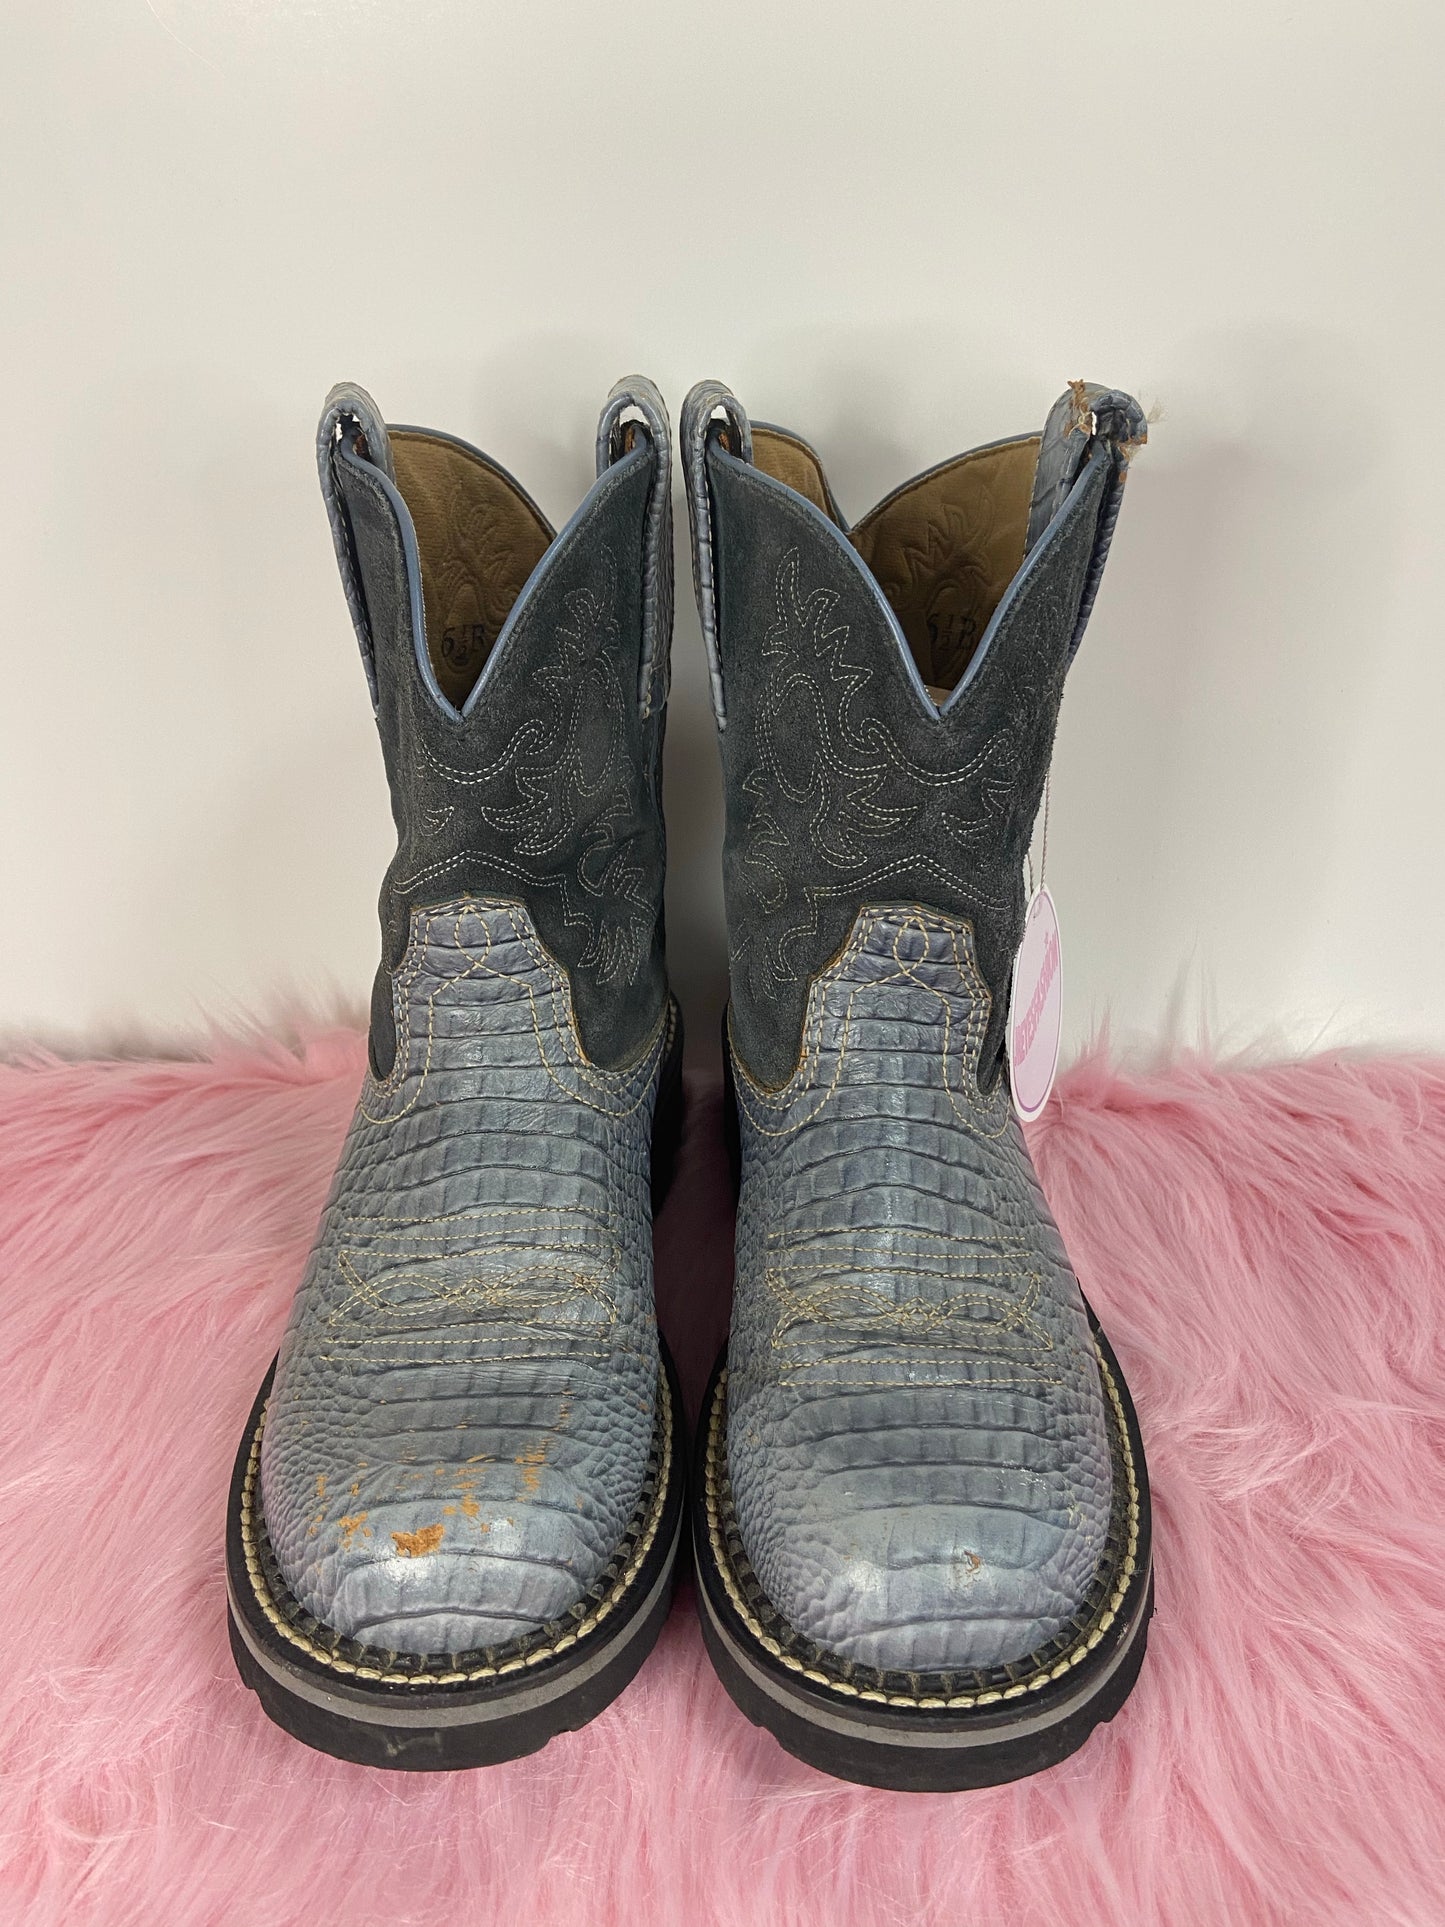 Blue Cowboy Boots - 6.5/7